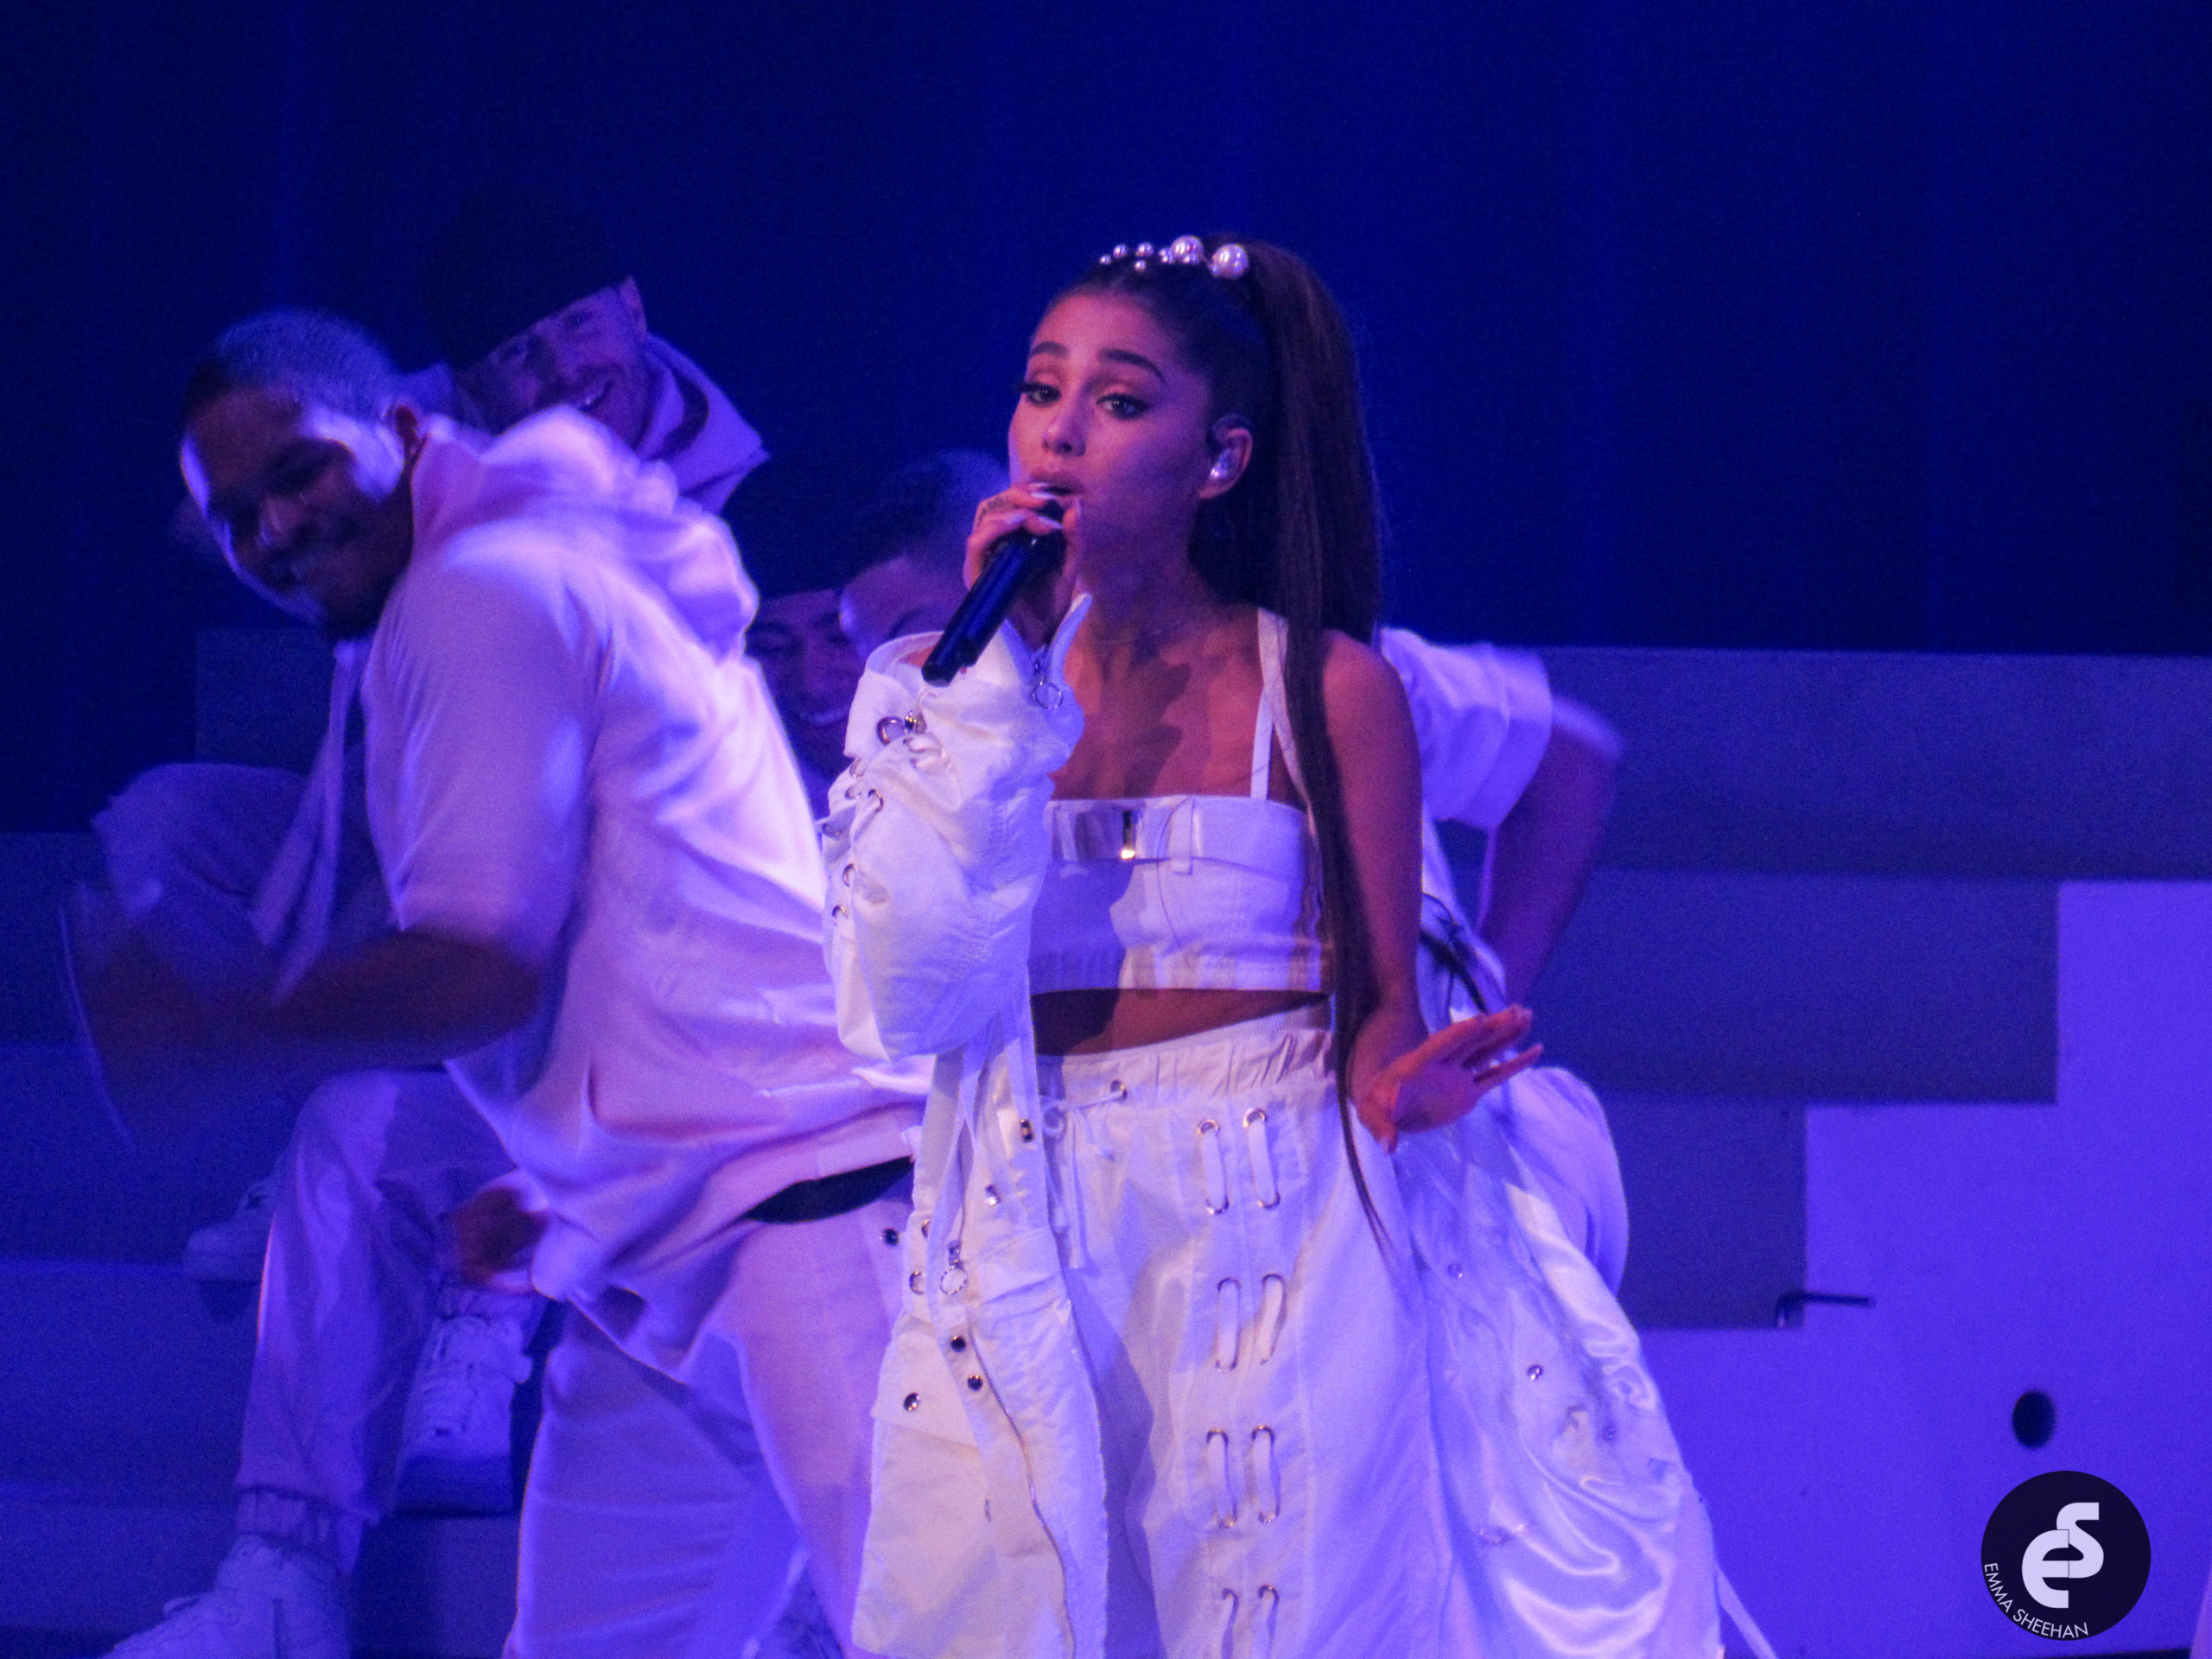 Ariana Grande singing at the Sweetener world tour